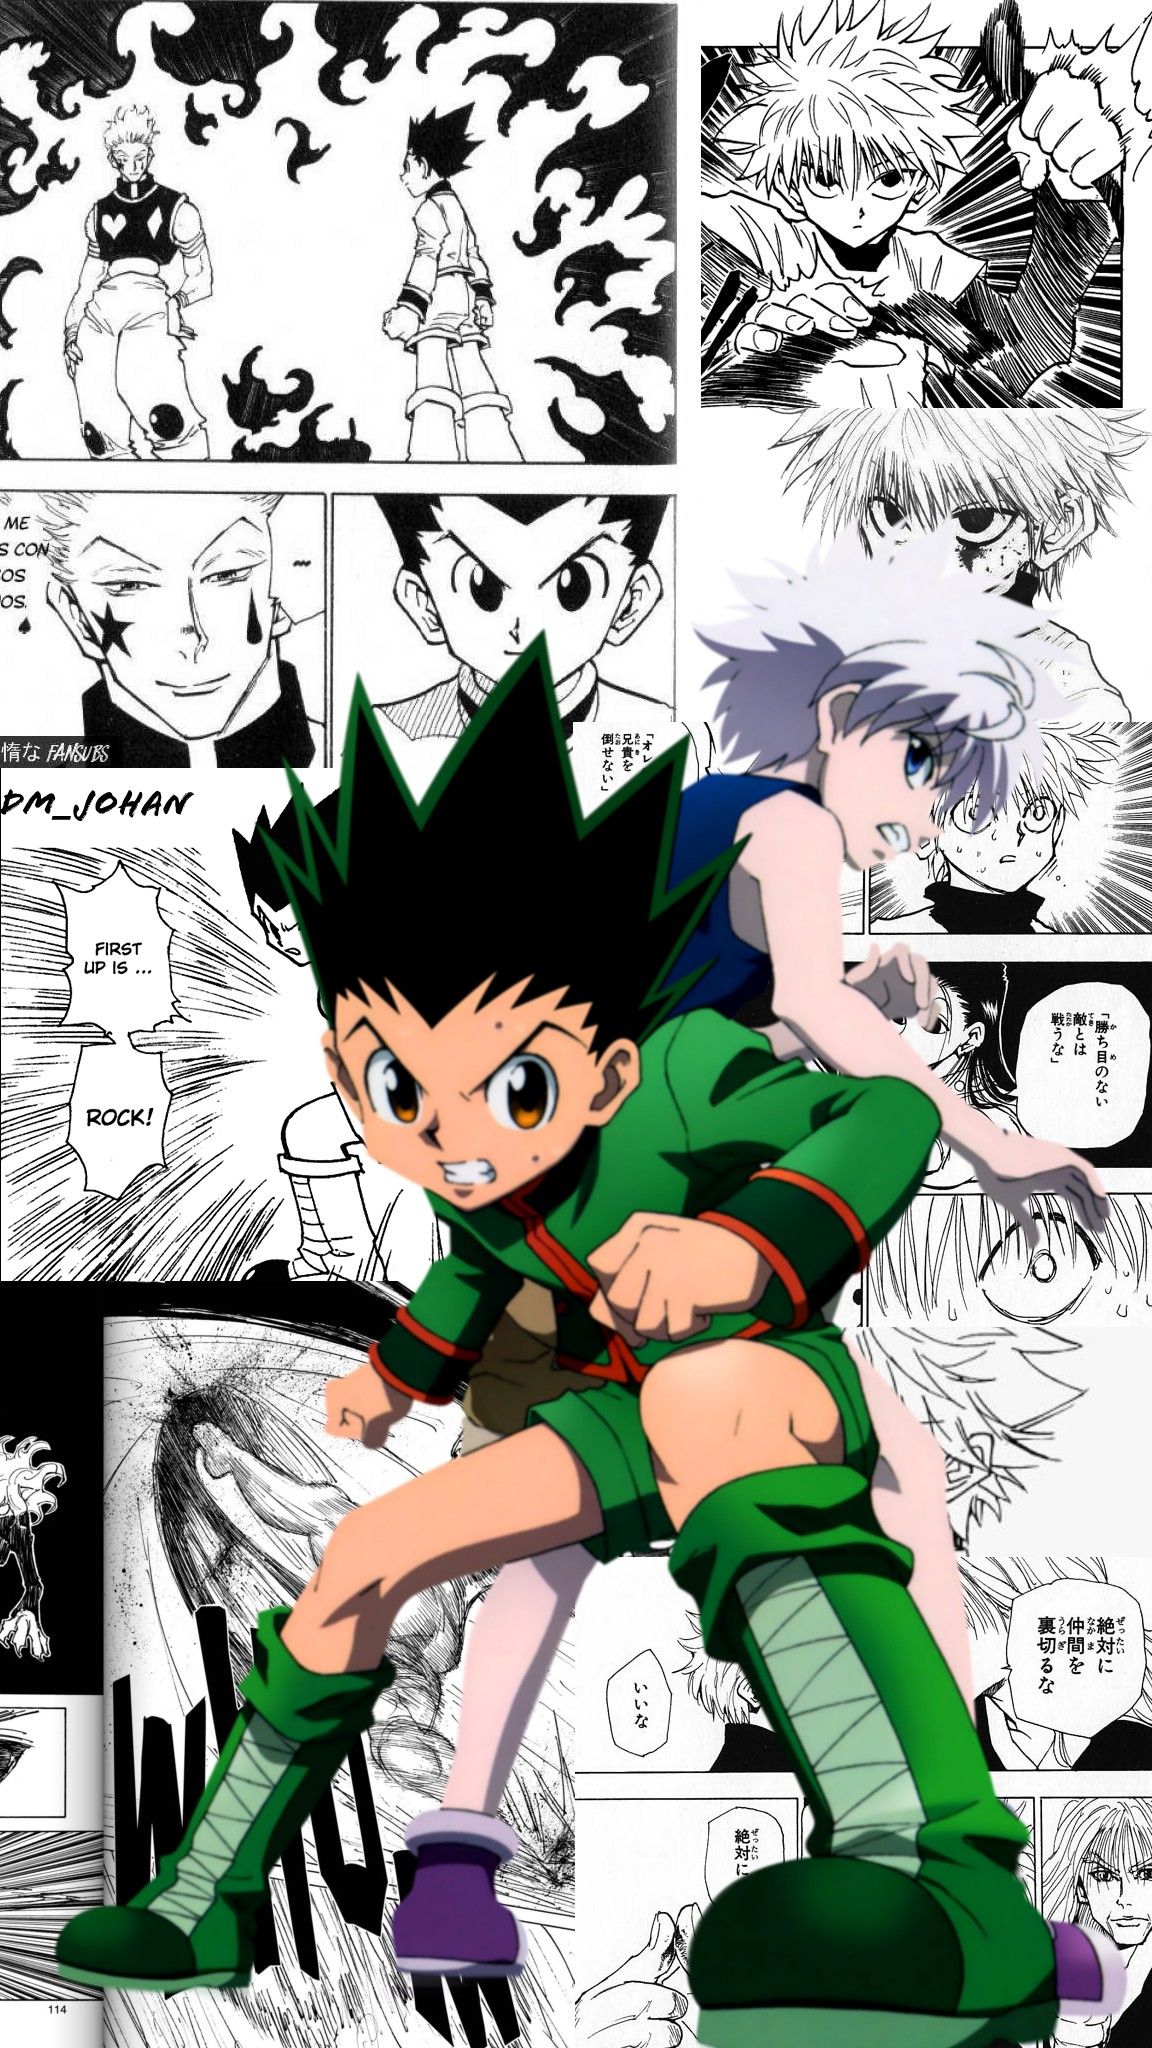 Gon and killua. Anime wallpaper, Cool anime wallpaper, Anime background wallpaper